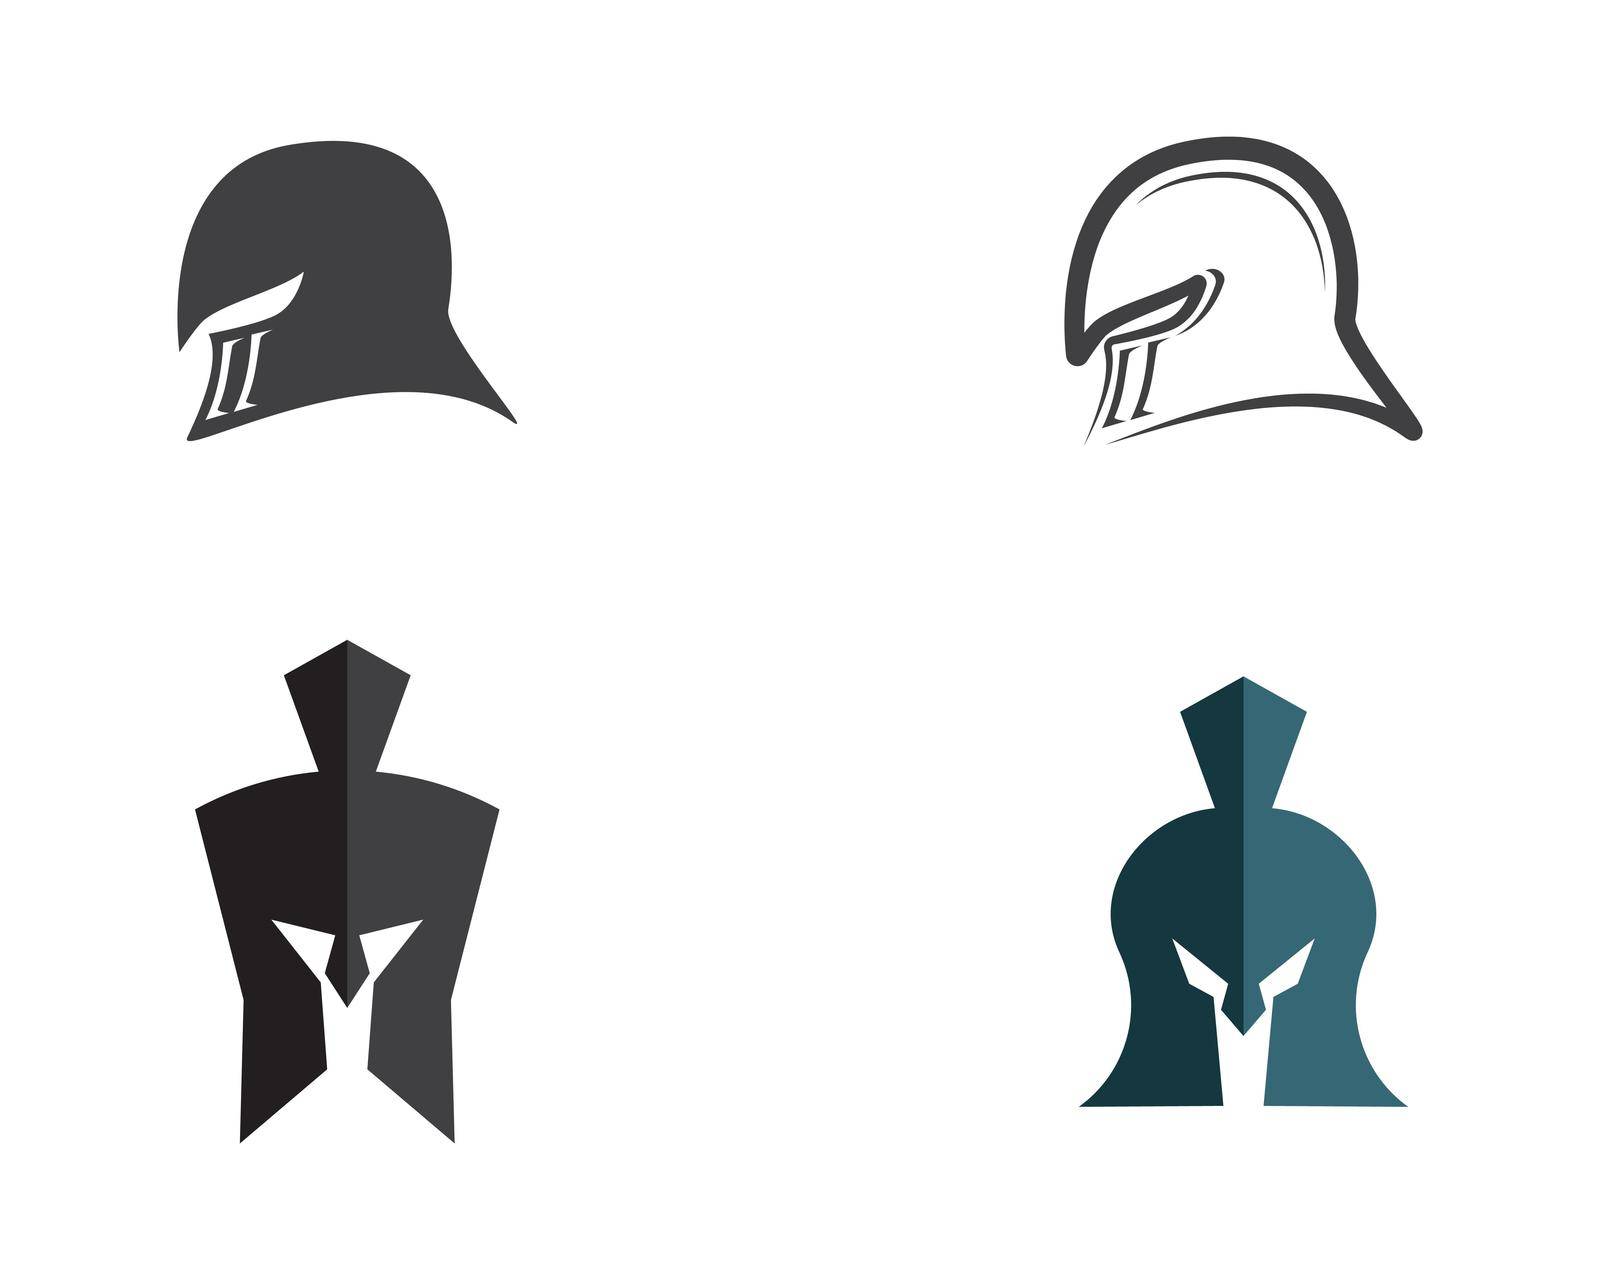 Spartan helmet logo template by Attades19